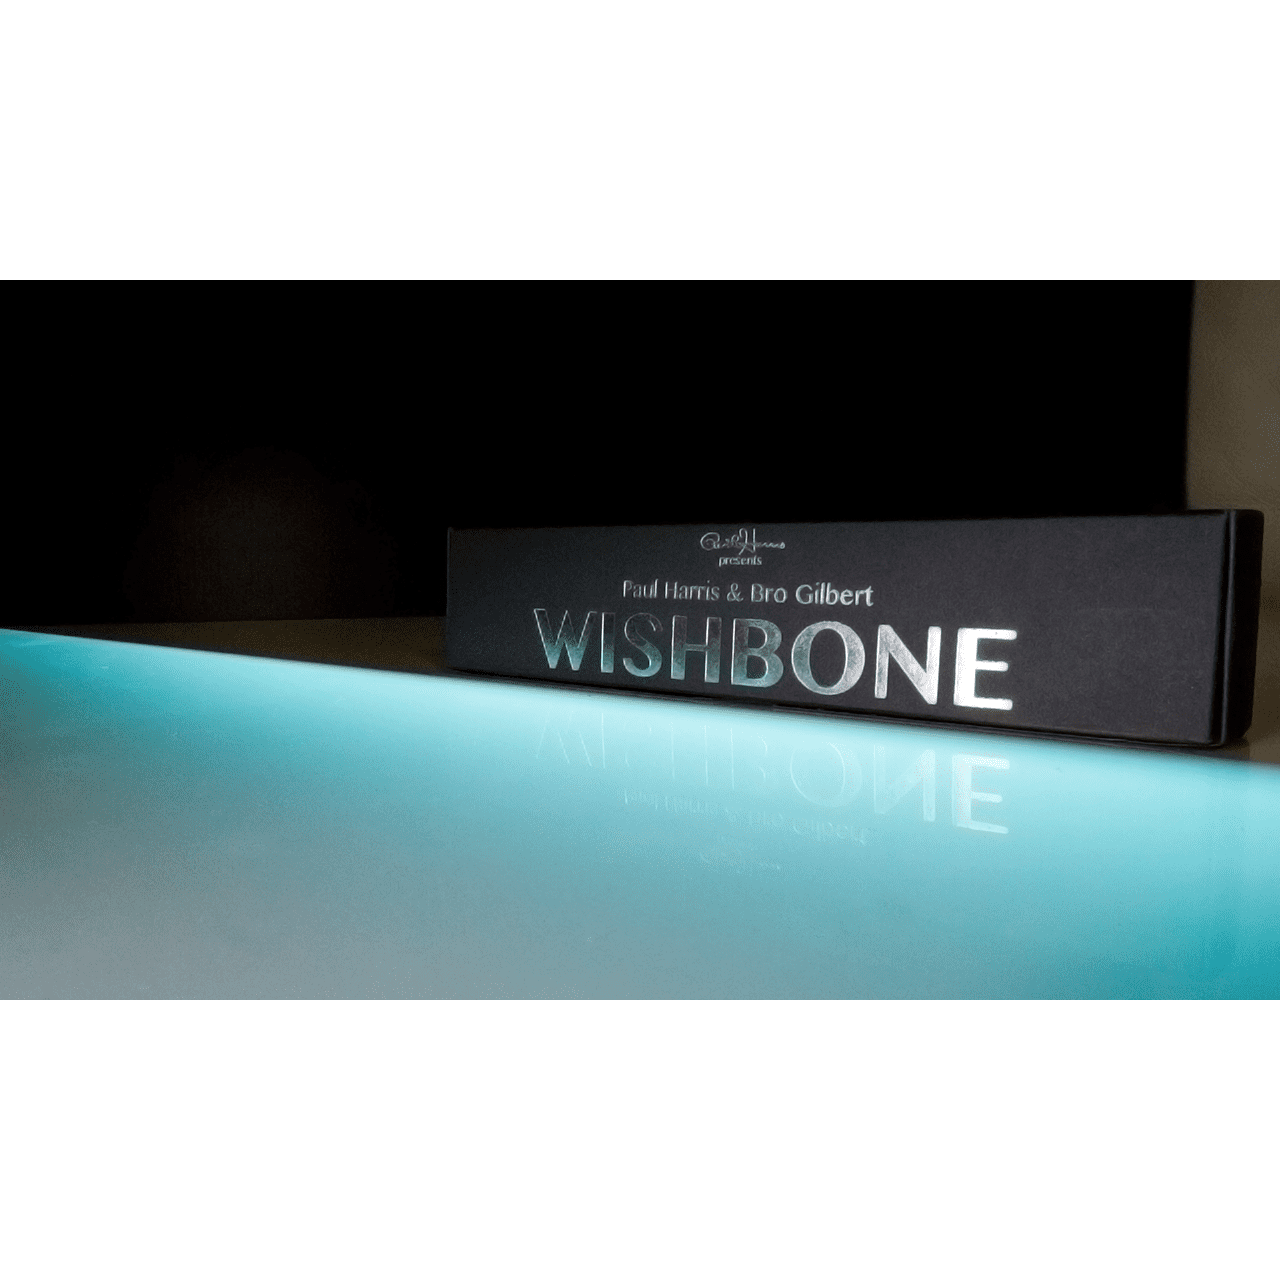 Paul Harris Presents Wishbone by Paul Harris and Bro Gilbert - Trick